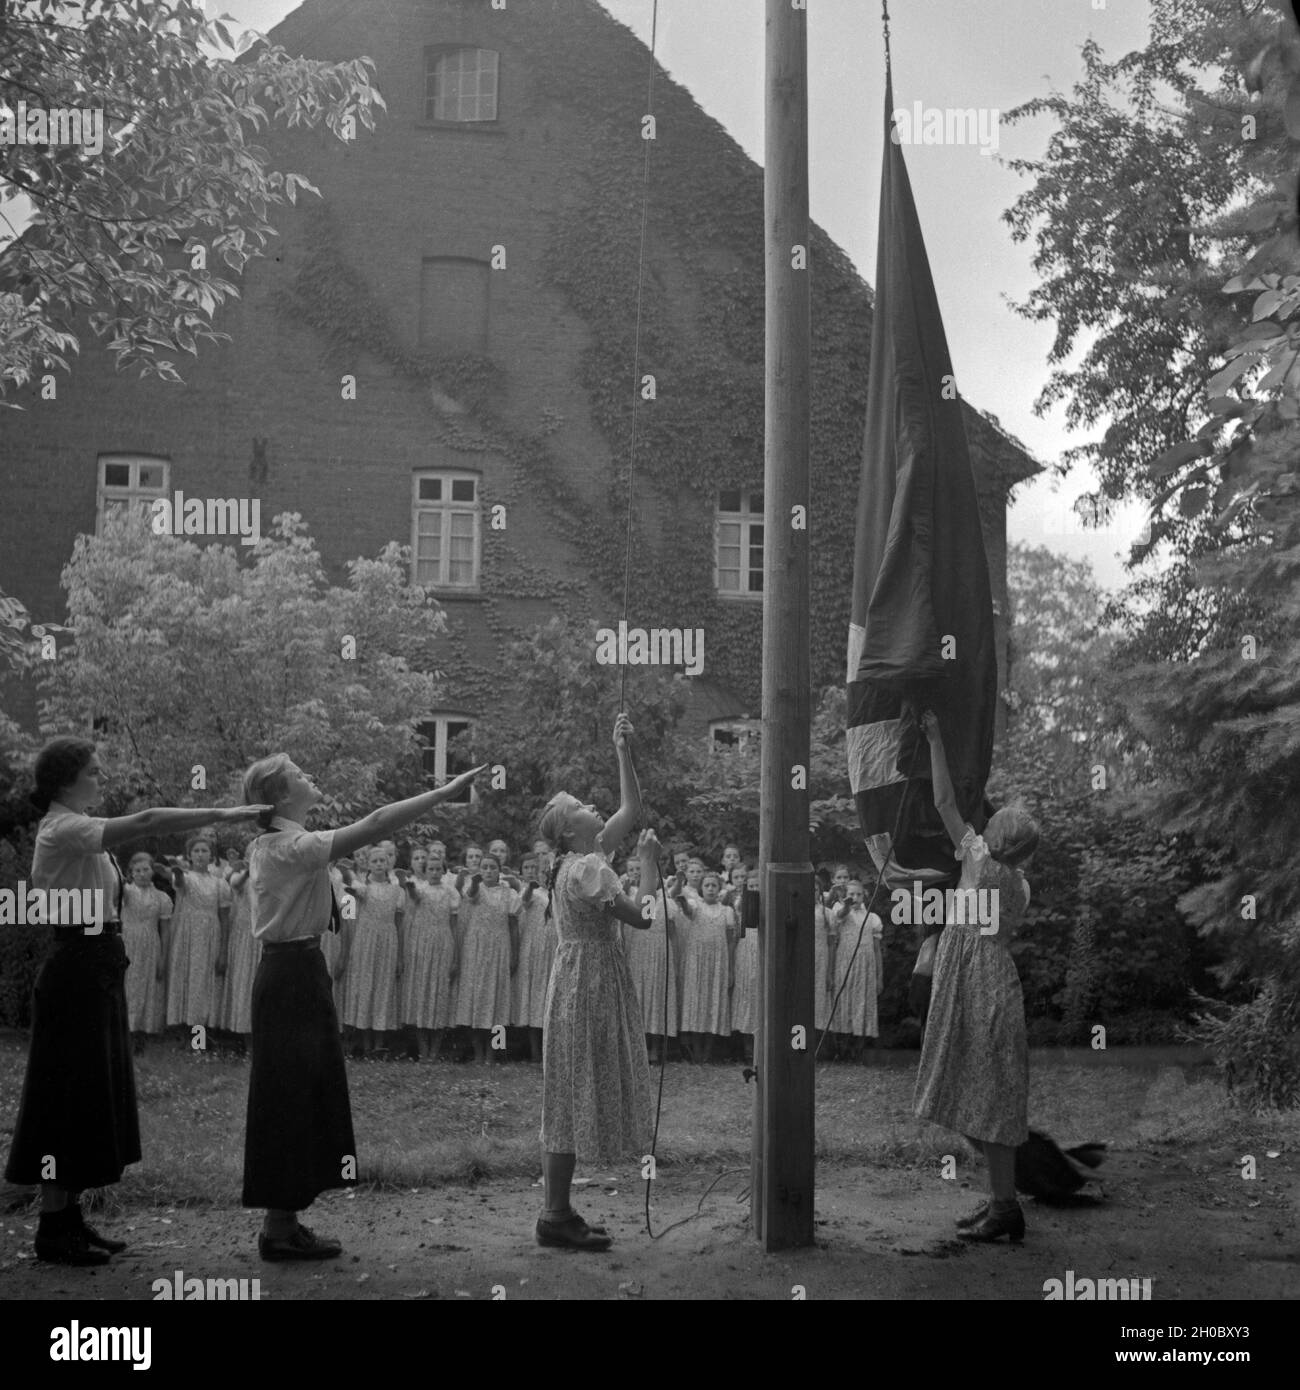 Morgendlicher Fahnenappell im Mädel Landjahr Lager in Polle an der Weser, Deutschland 1930er Jahre. Matutinal flag muster at the Hitler youth BdM camp at Polle, Germany 1930s. Stock Photo